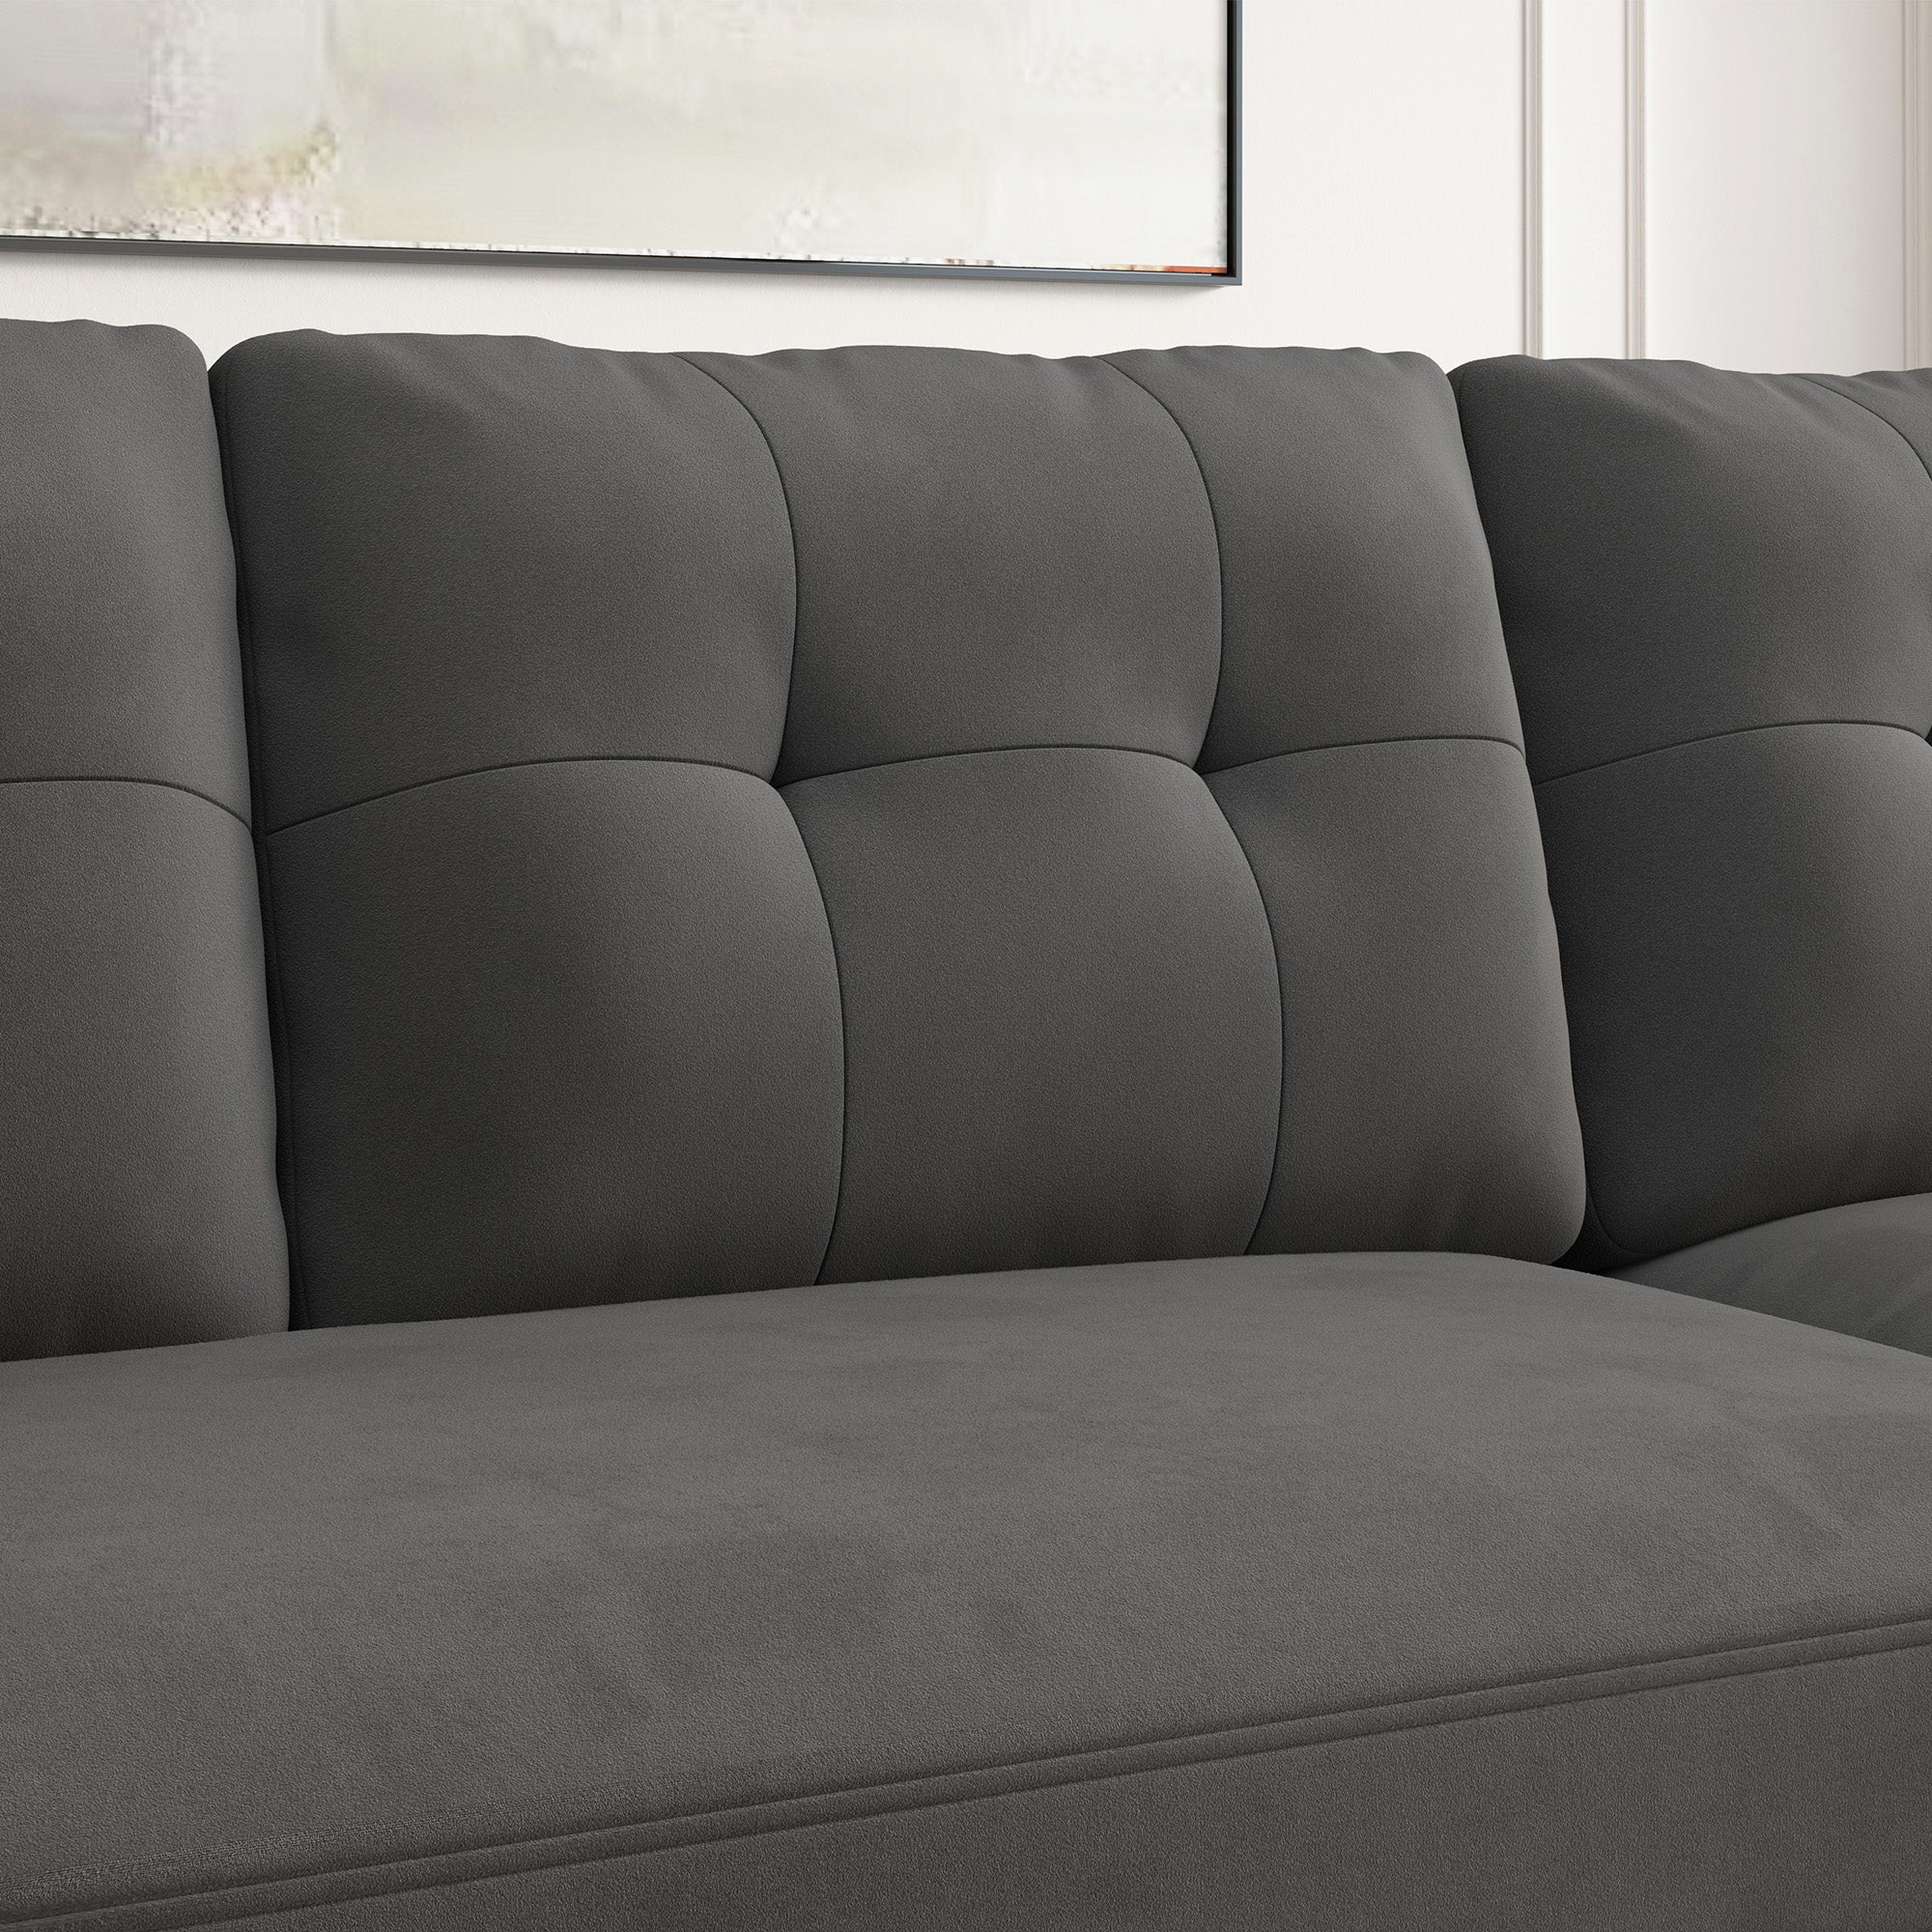 HONBAY Velvet 4-Seat Sectional Sofa Sleeper with Storage